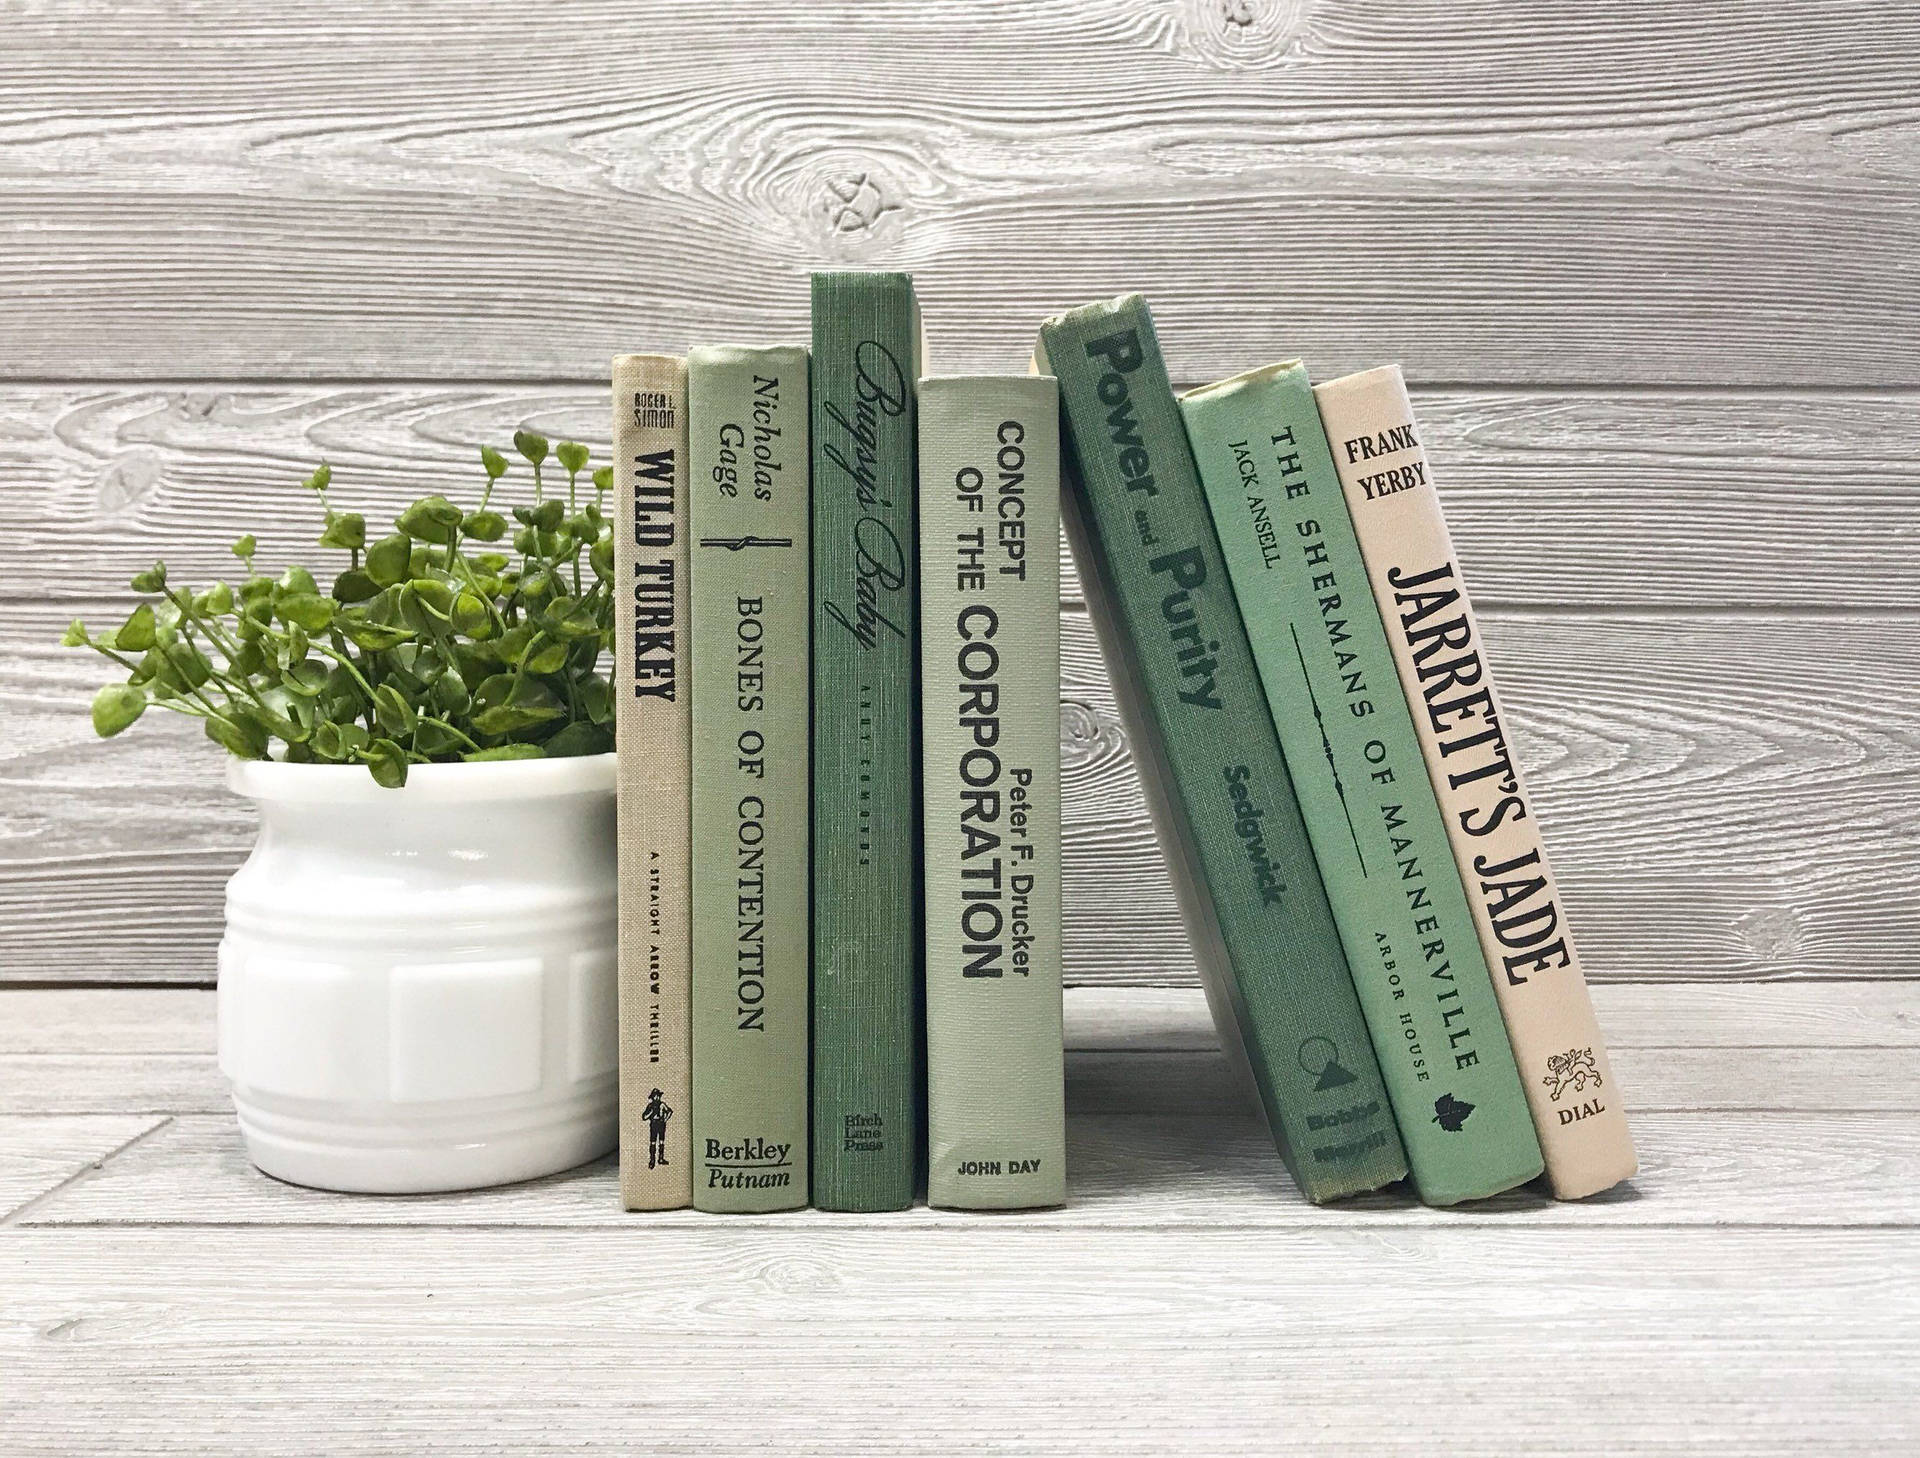 A white vase holding green plants next to books - Green, sage green, books